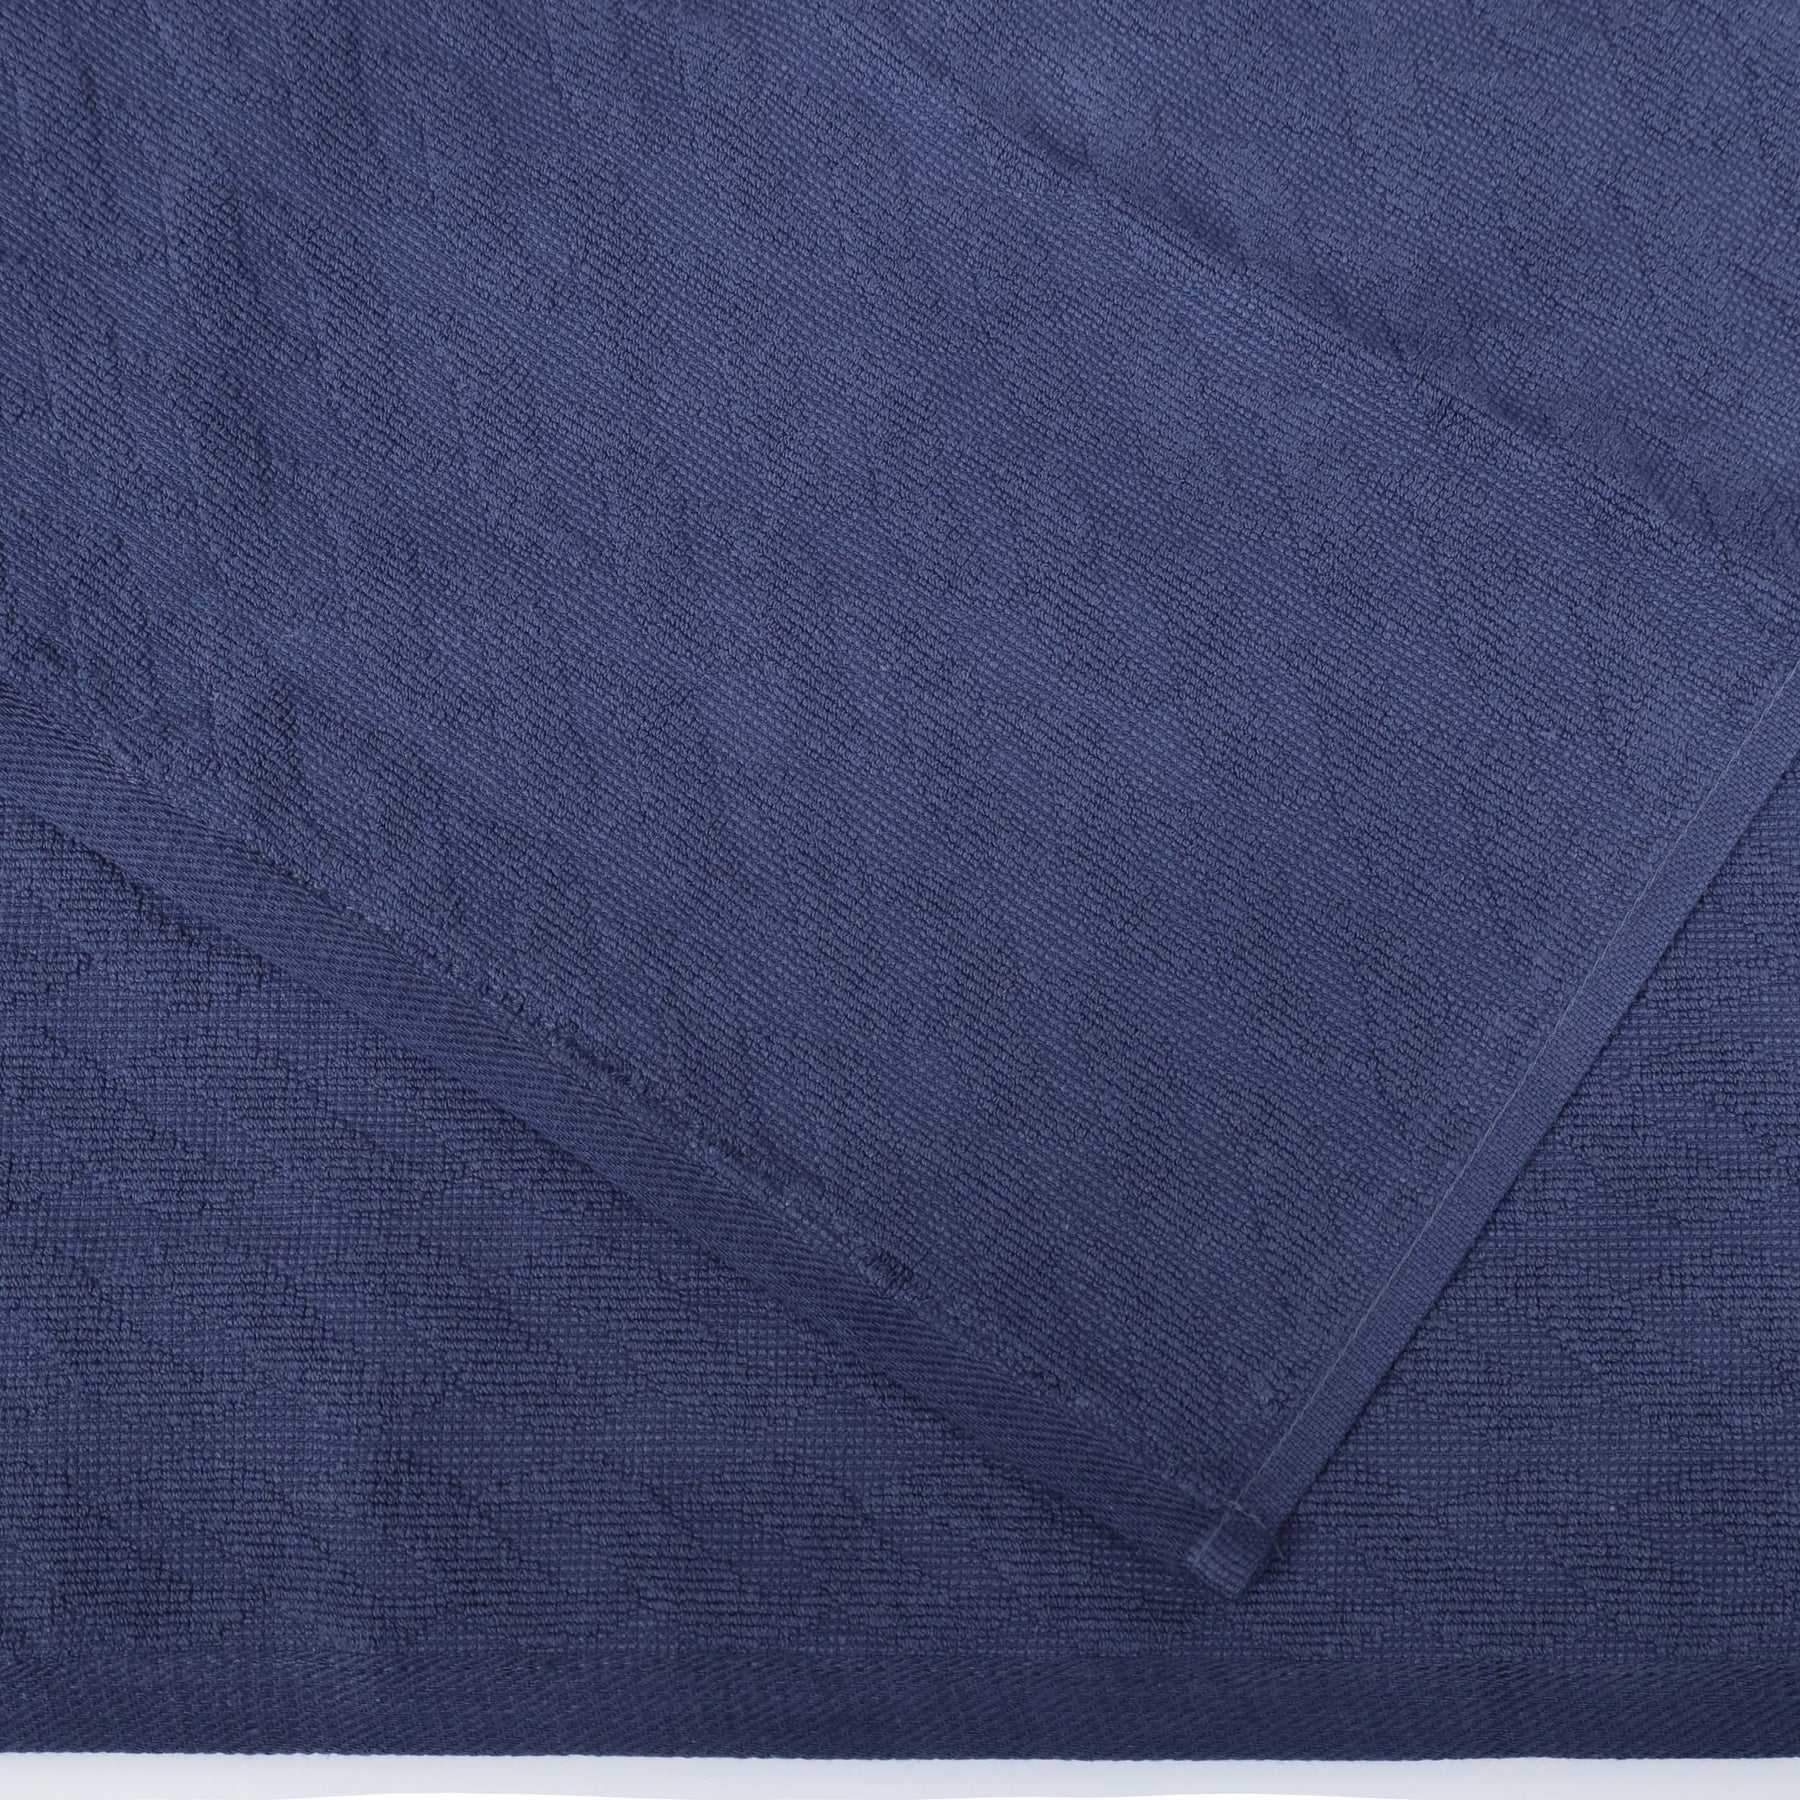 Premium Turkish Cotton Jacquard Herringbone and Solid 12-Piece Face Towel/ Washcloth Set - Navy Blue